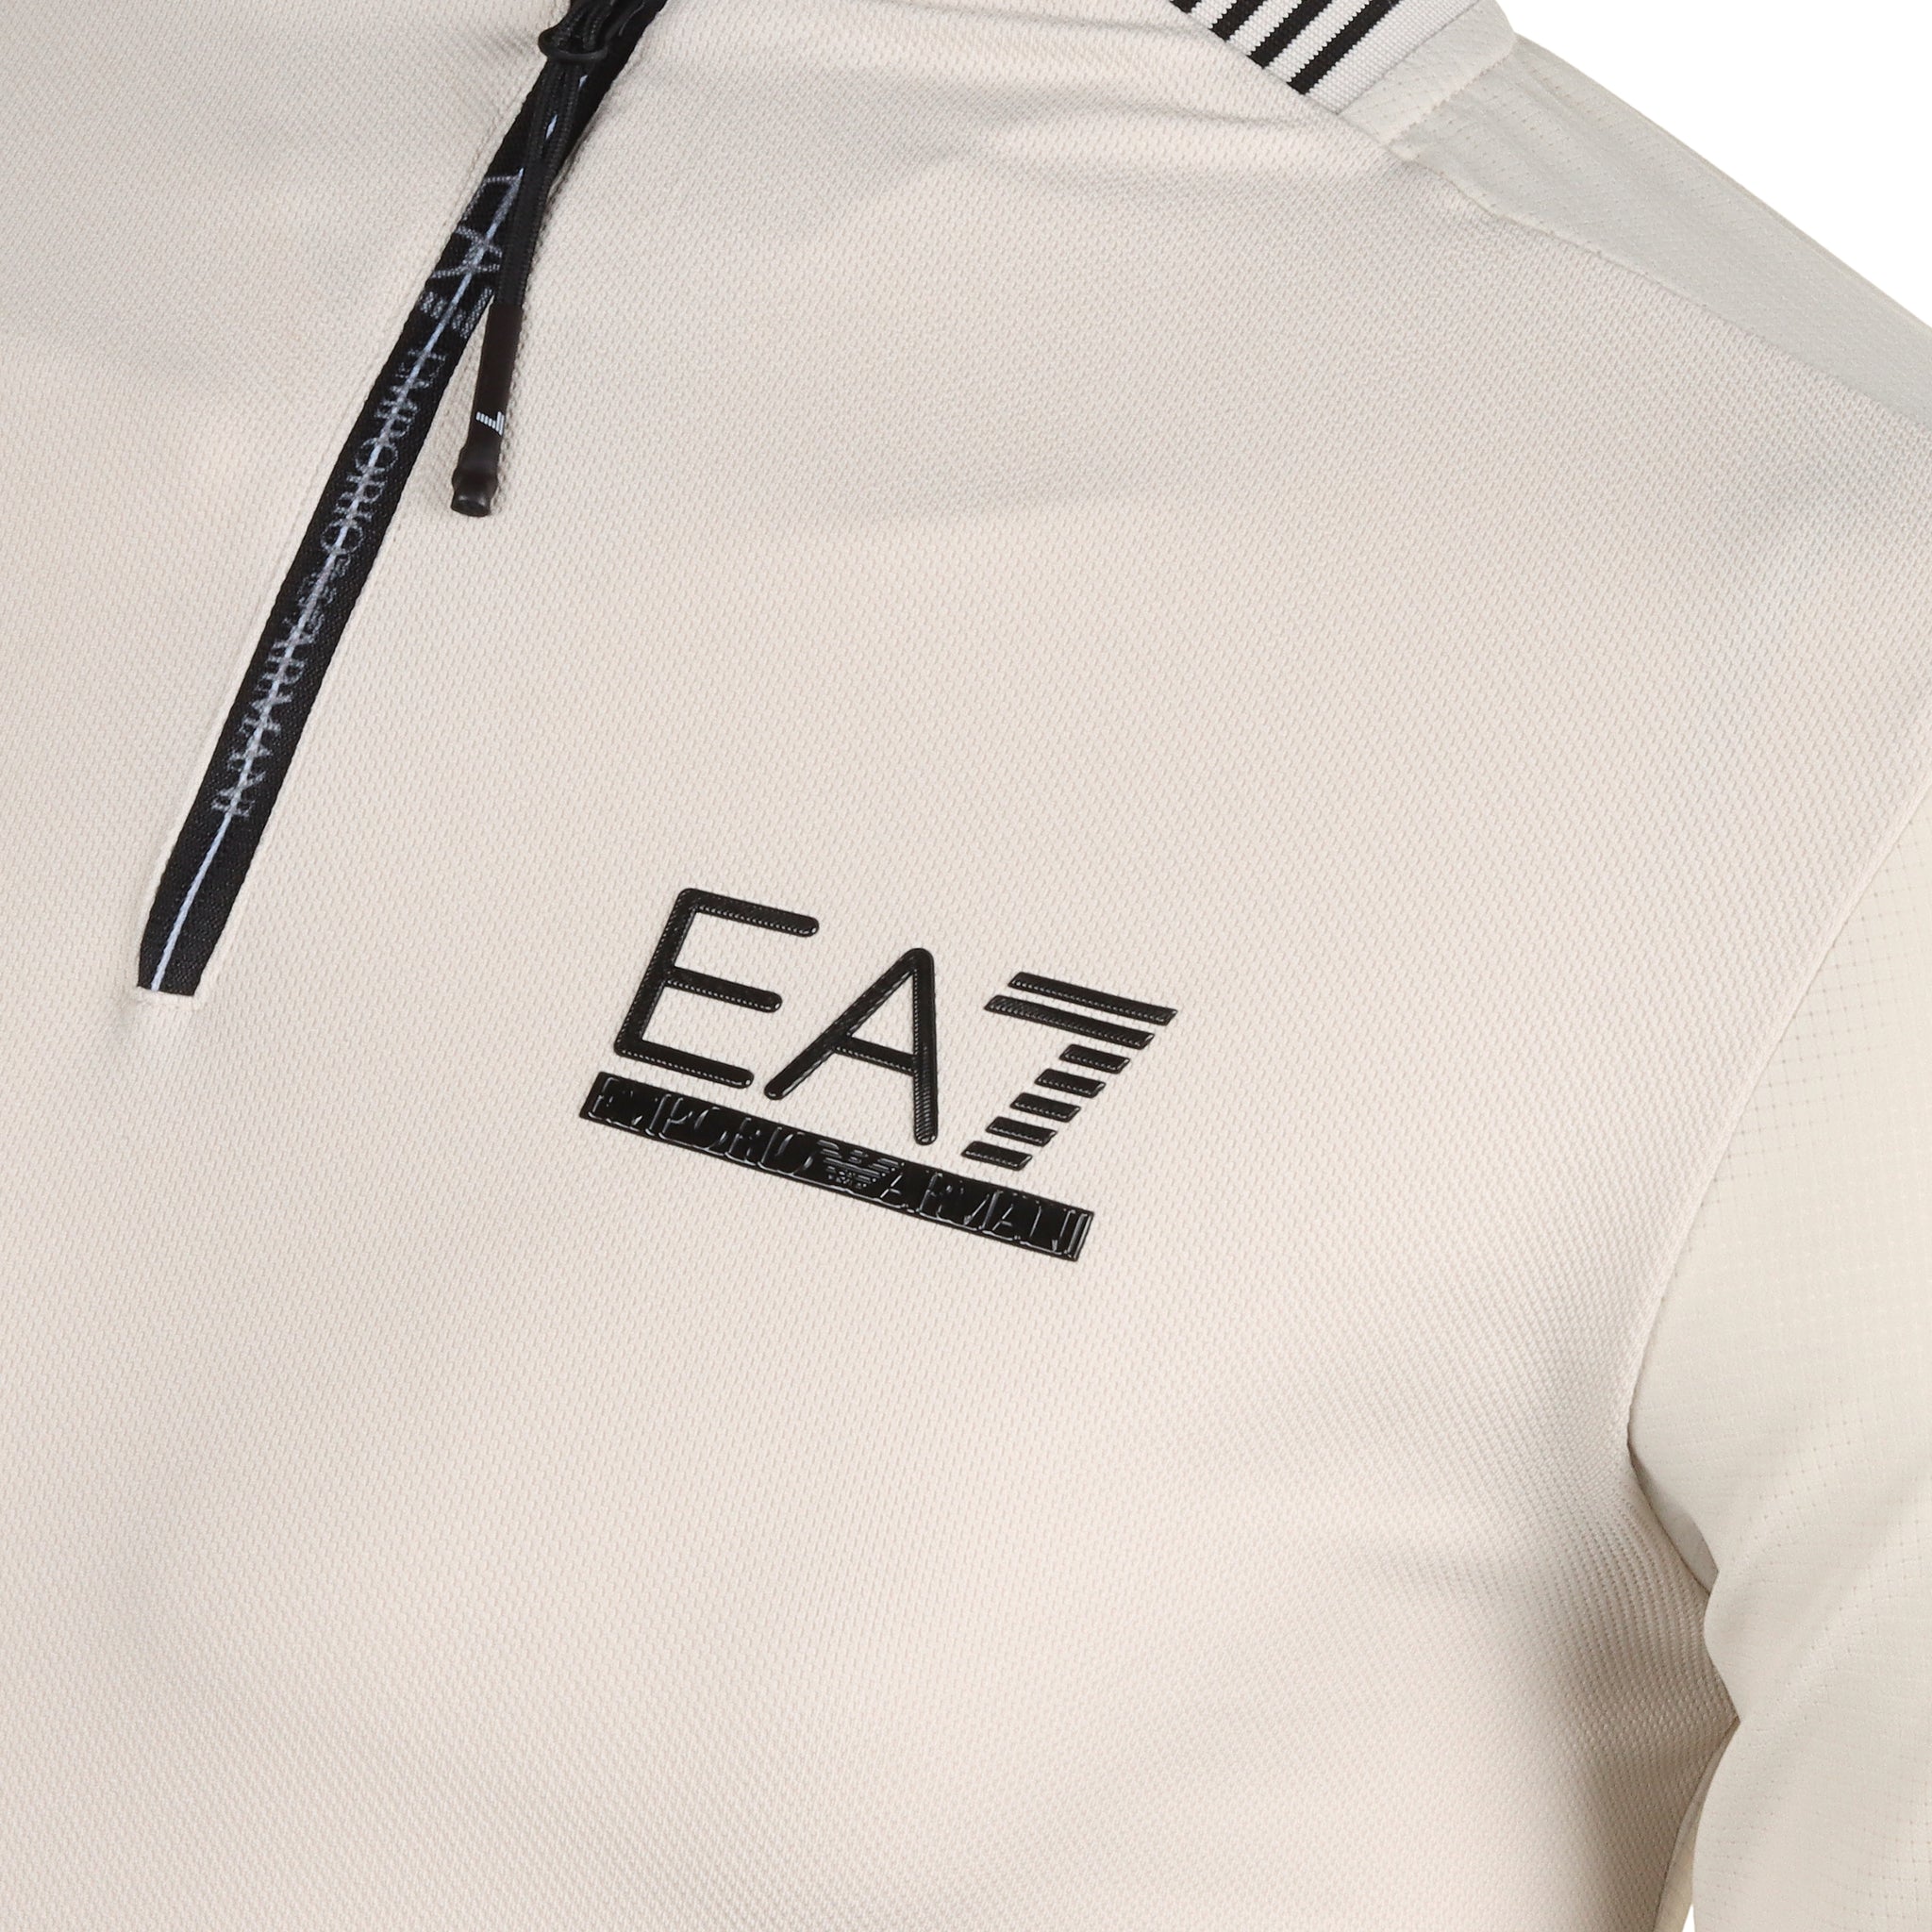 Emporio Armani EA7 Golf Ventus7 Zip Neck LS Shirt